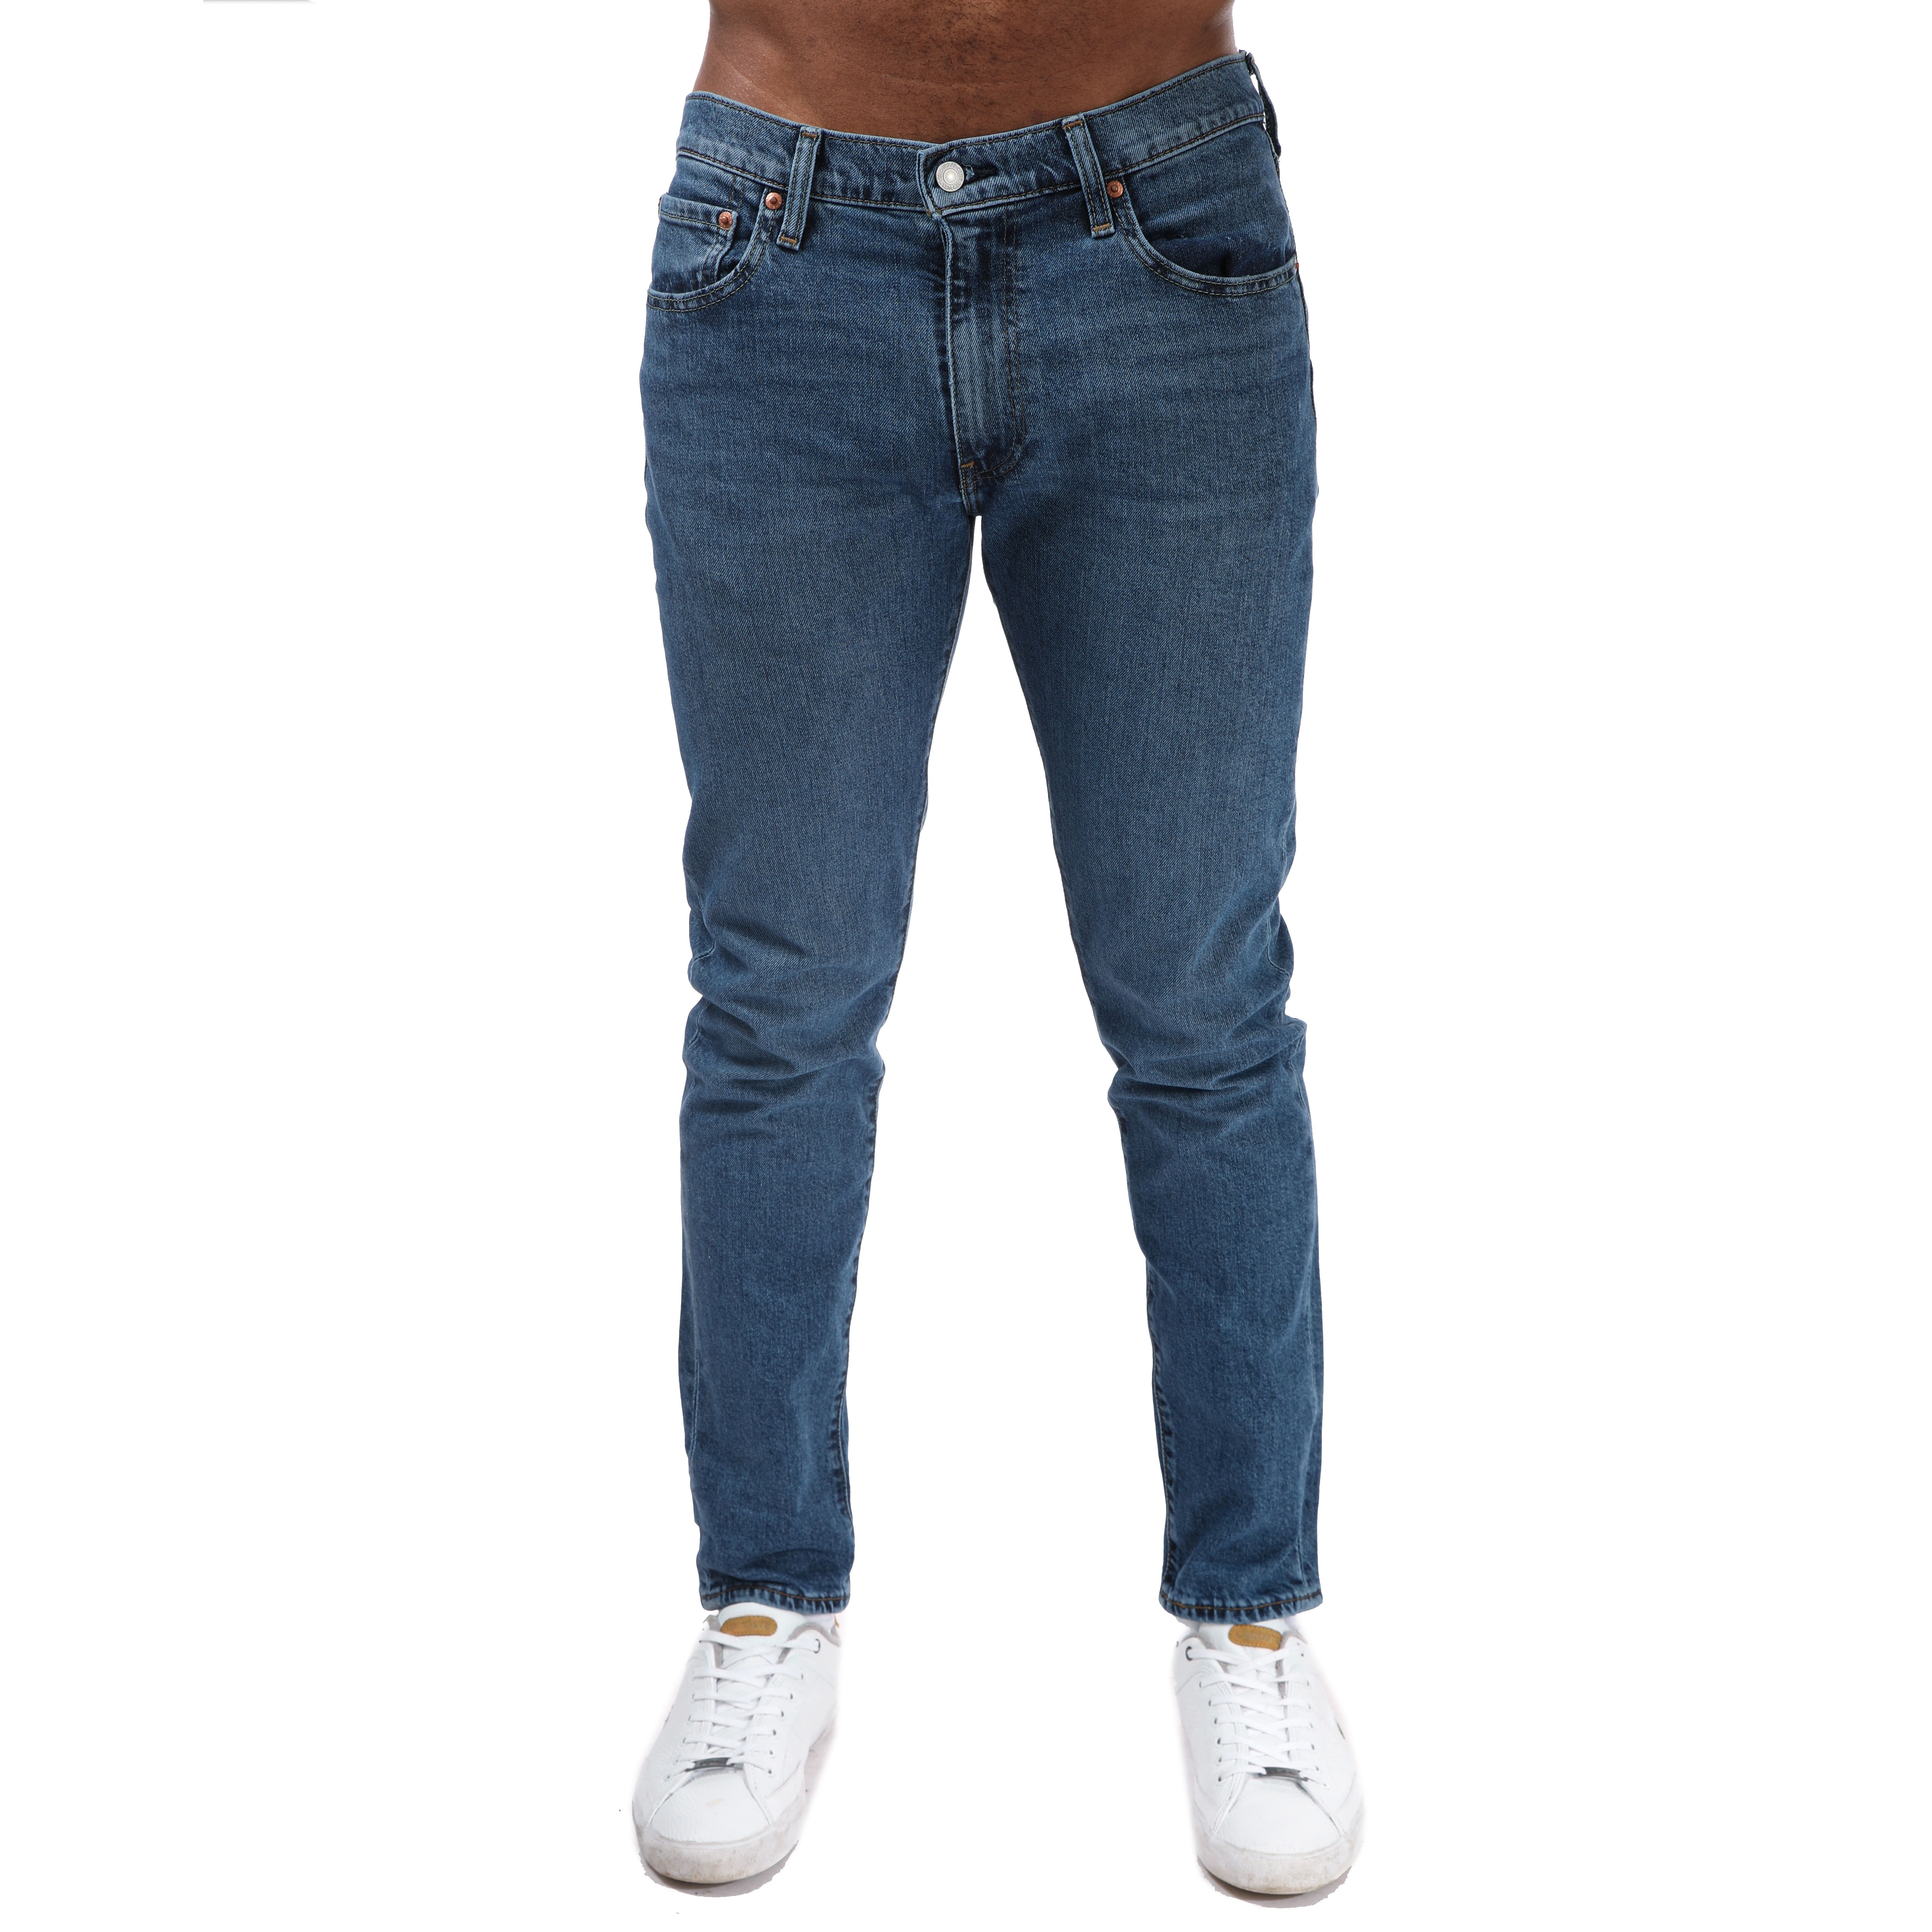 Mens 501 Original Fit Selvedge Jeans